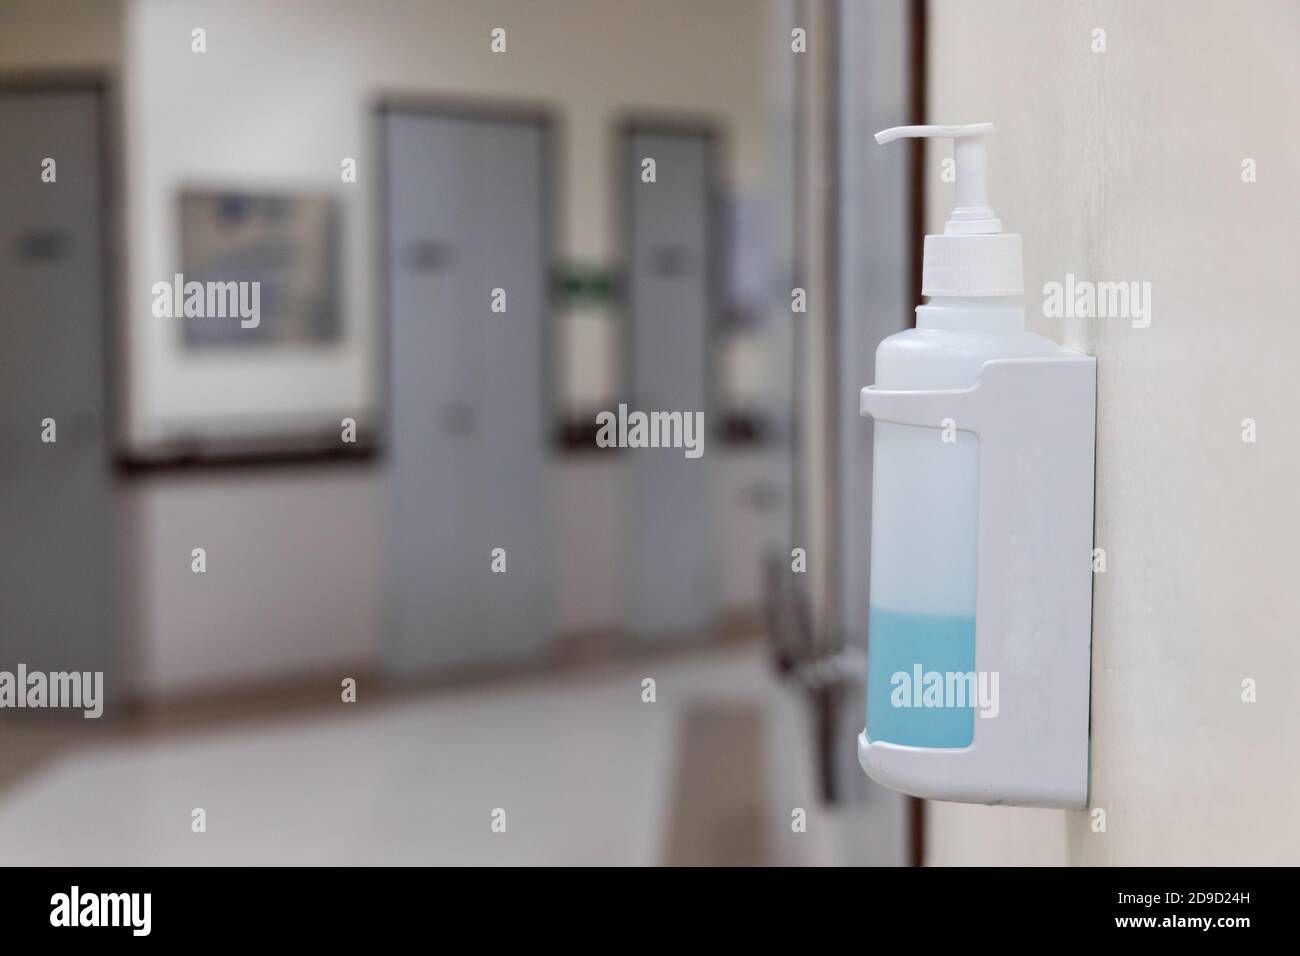 Public hand disinfectant sanitizer dispenser available in hospital for hygiene Stock Photo